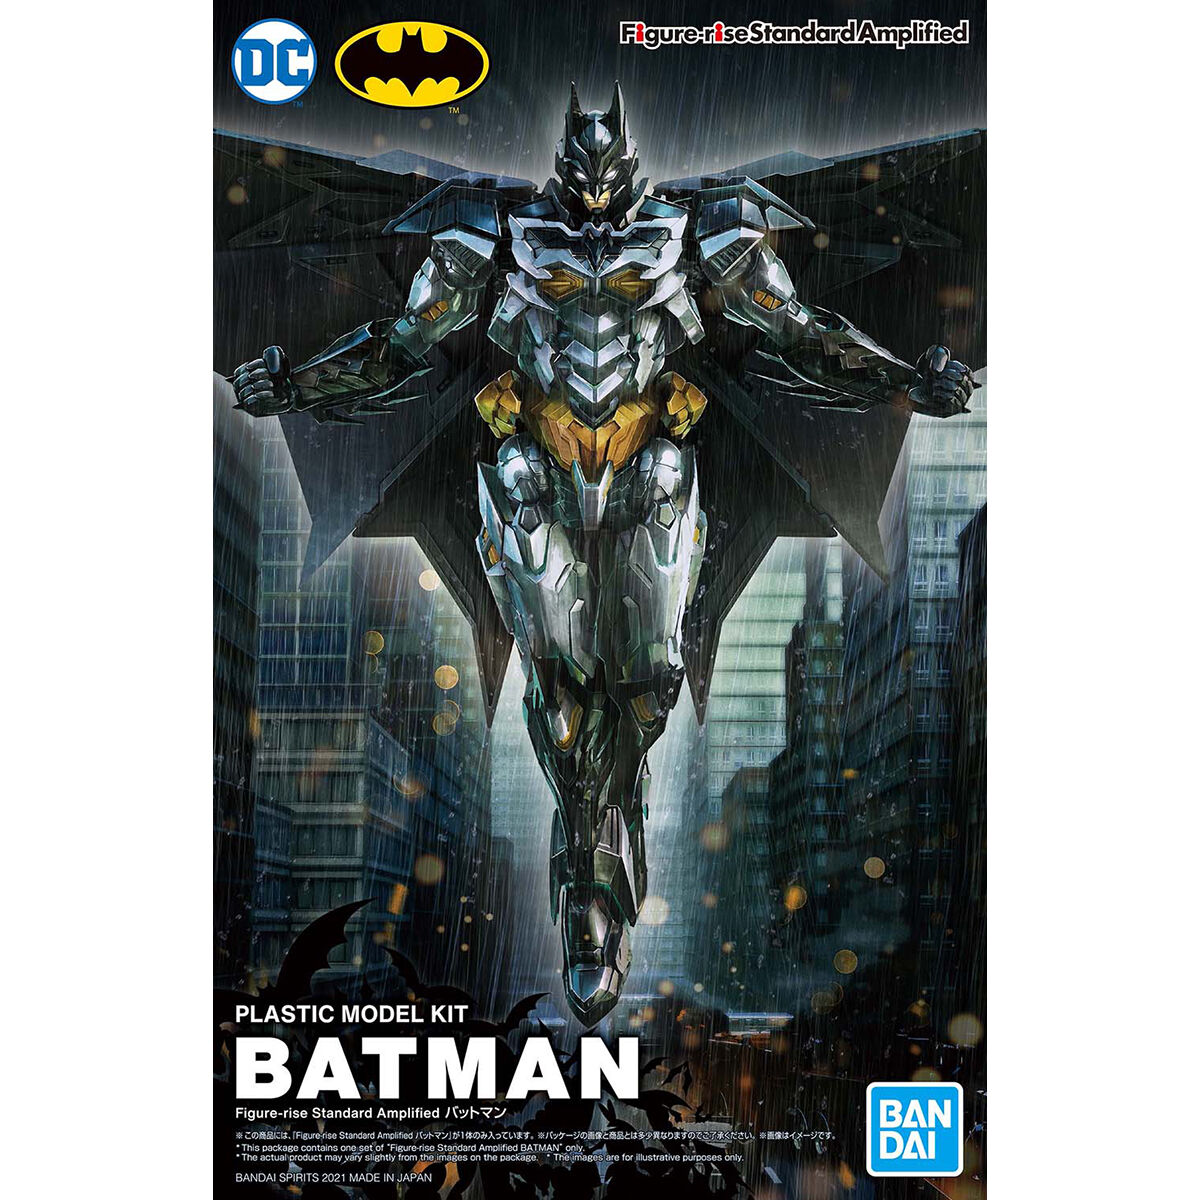 Batman: Dark Knight - Batman - Figure-rise Standard Amplified (Bandai), DC hero Batman model kit with movable joints and removable Batarang, Nippon Figures